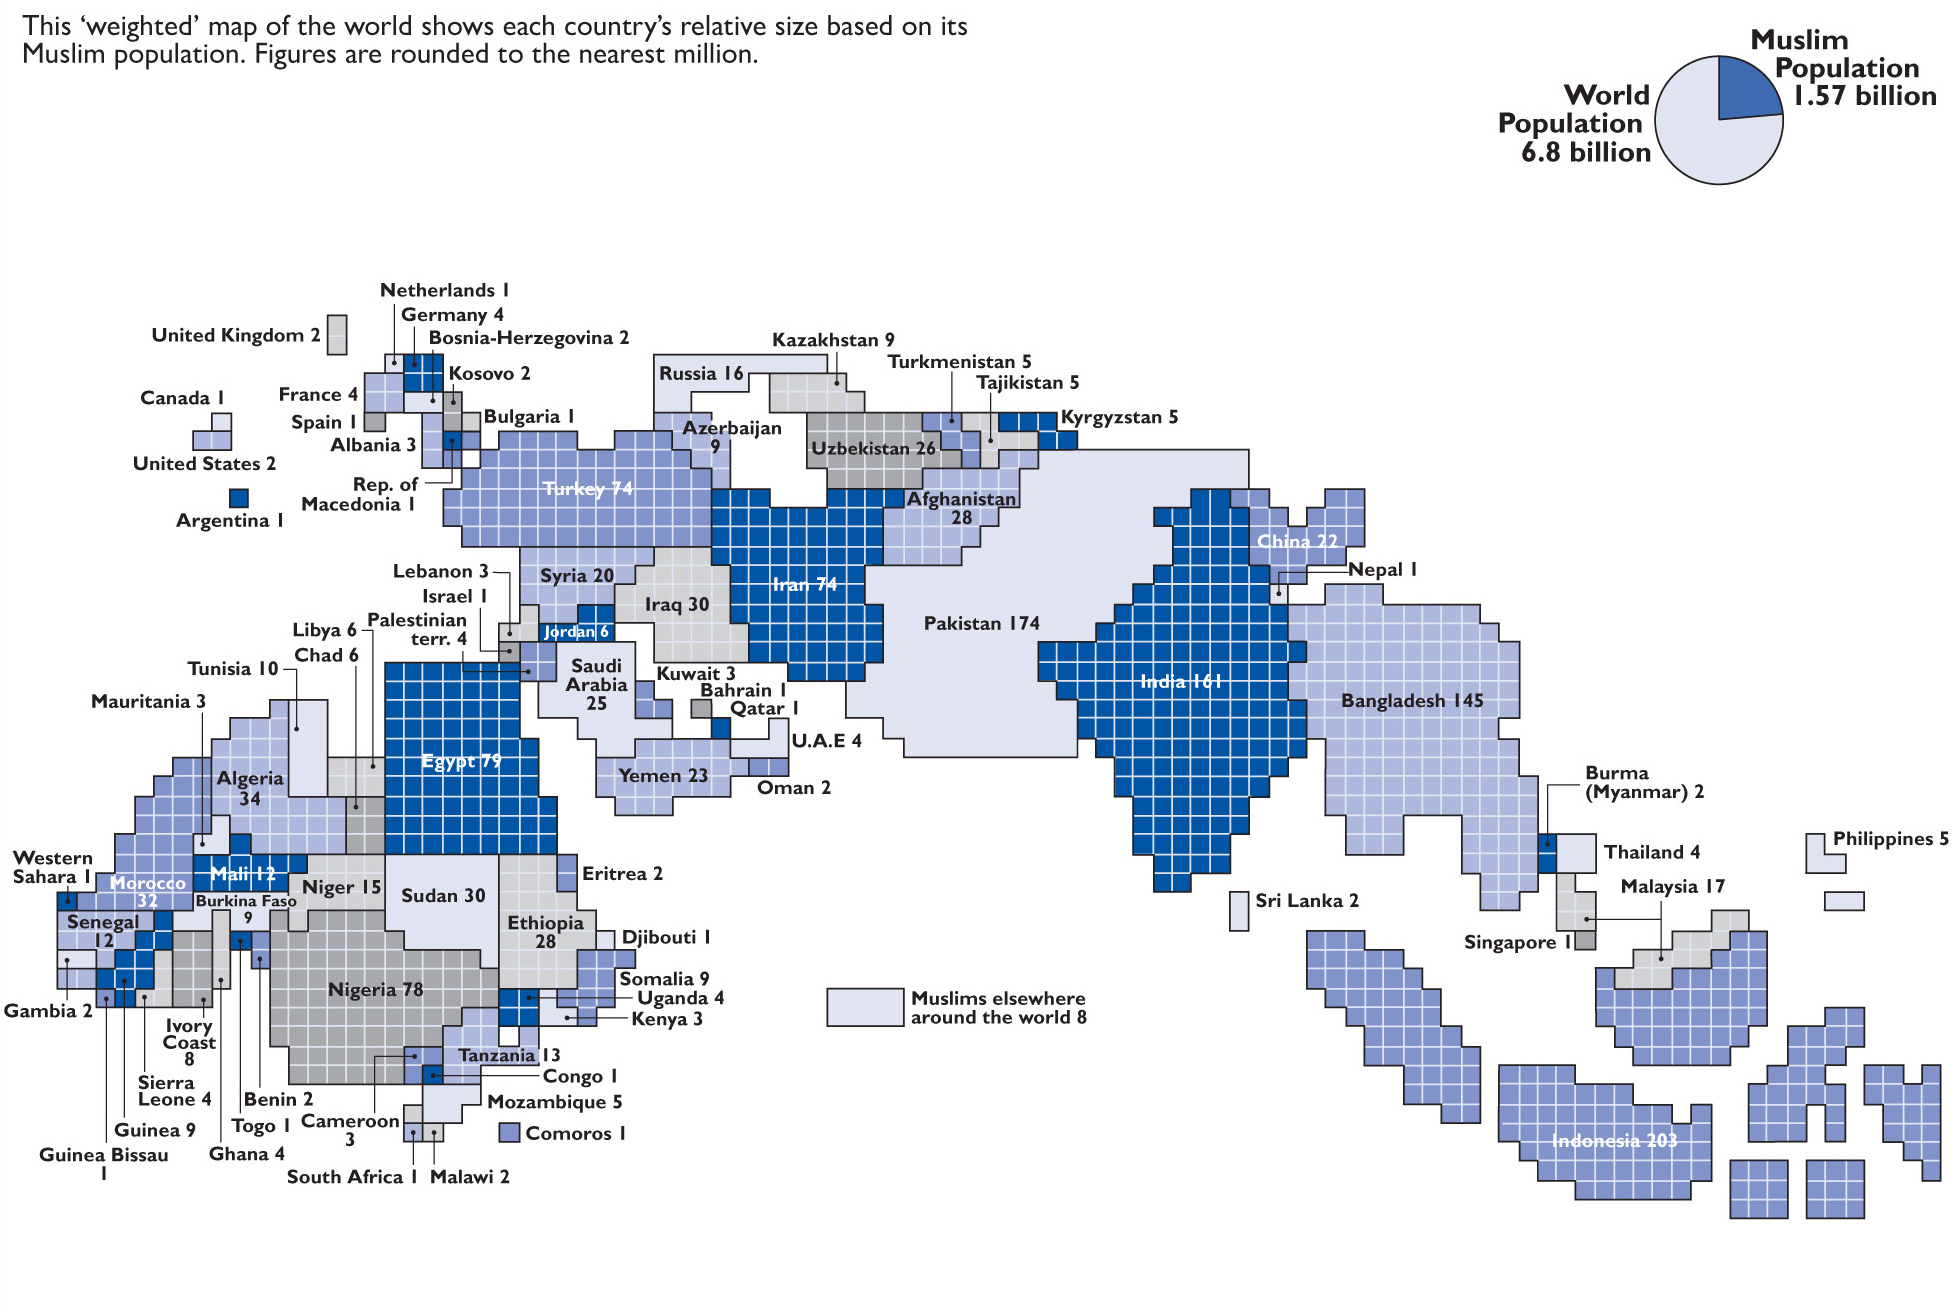 Weighted Muslim populations around the world